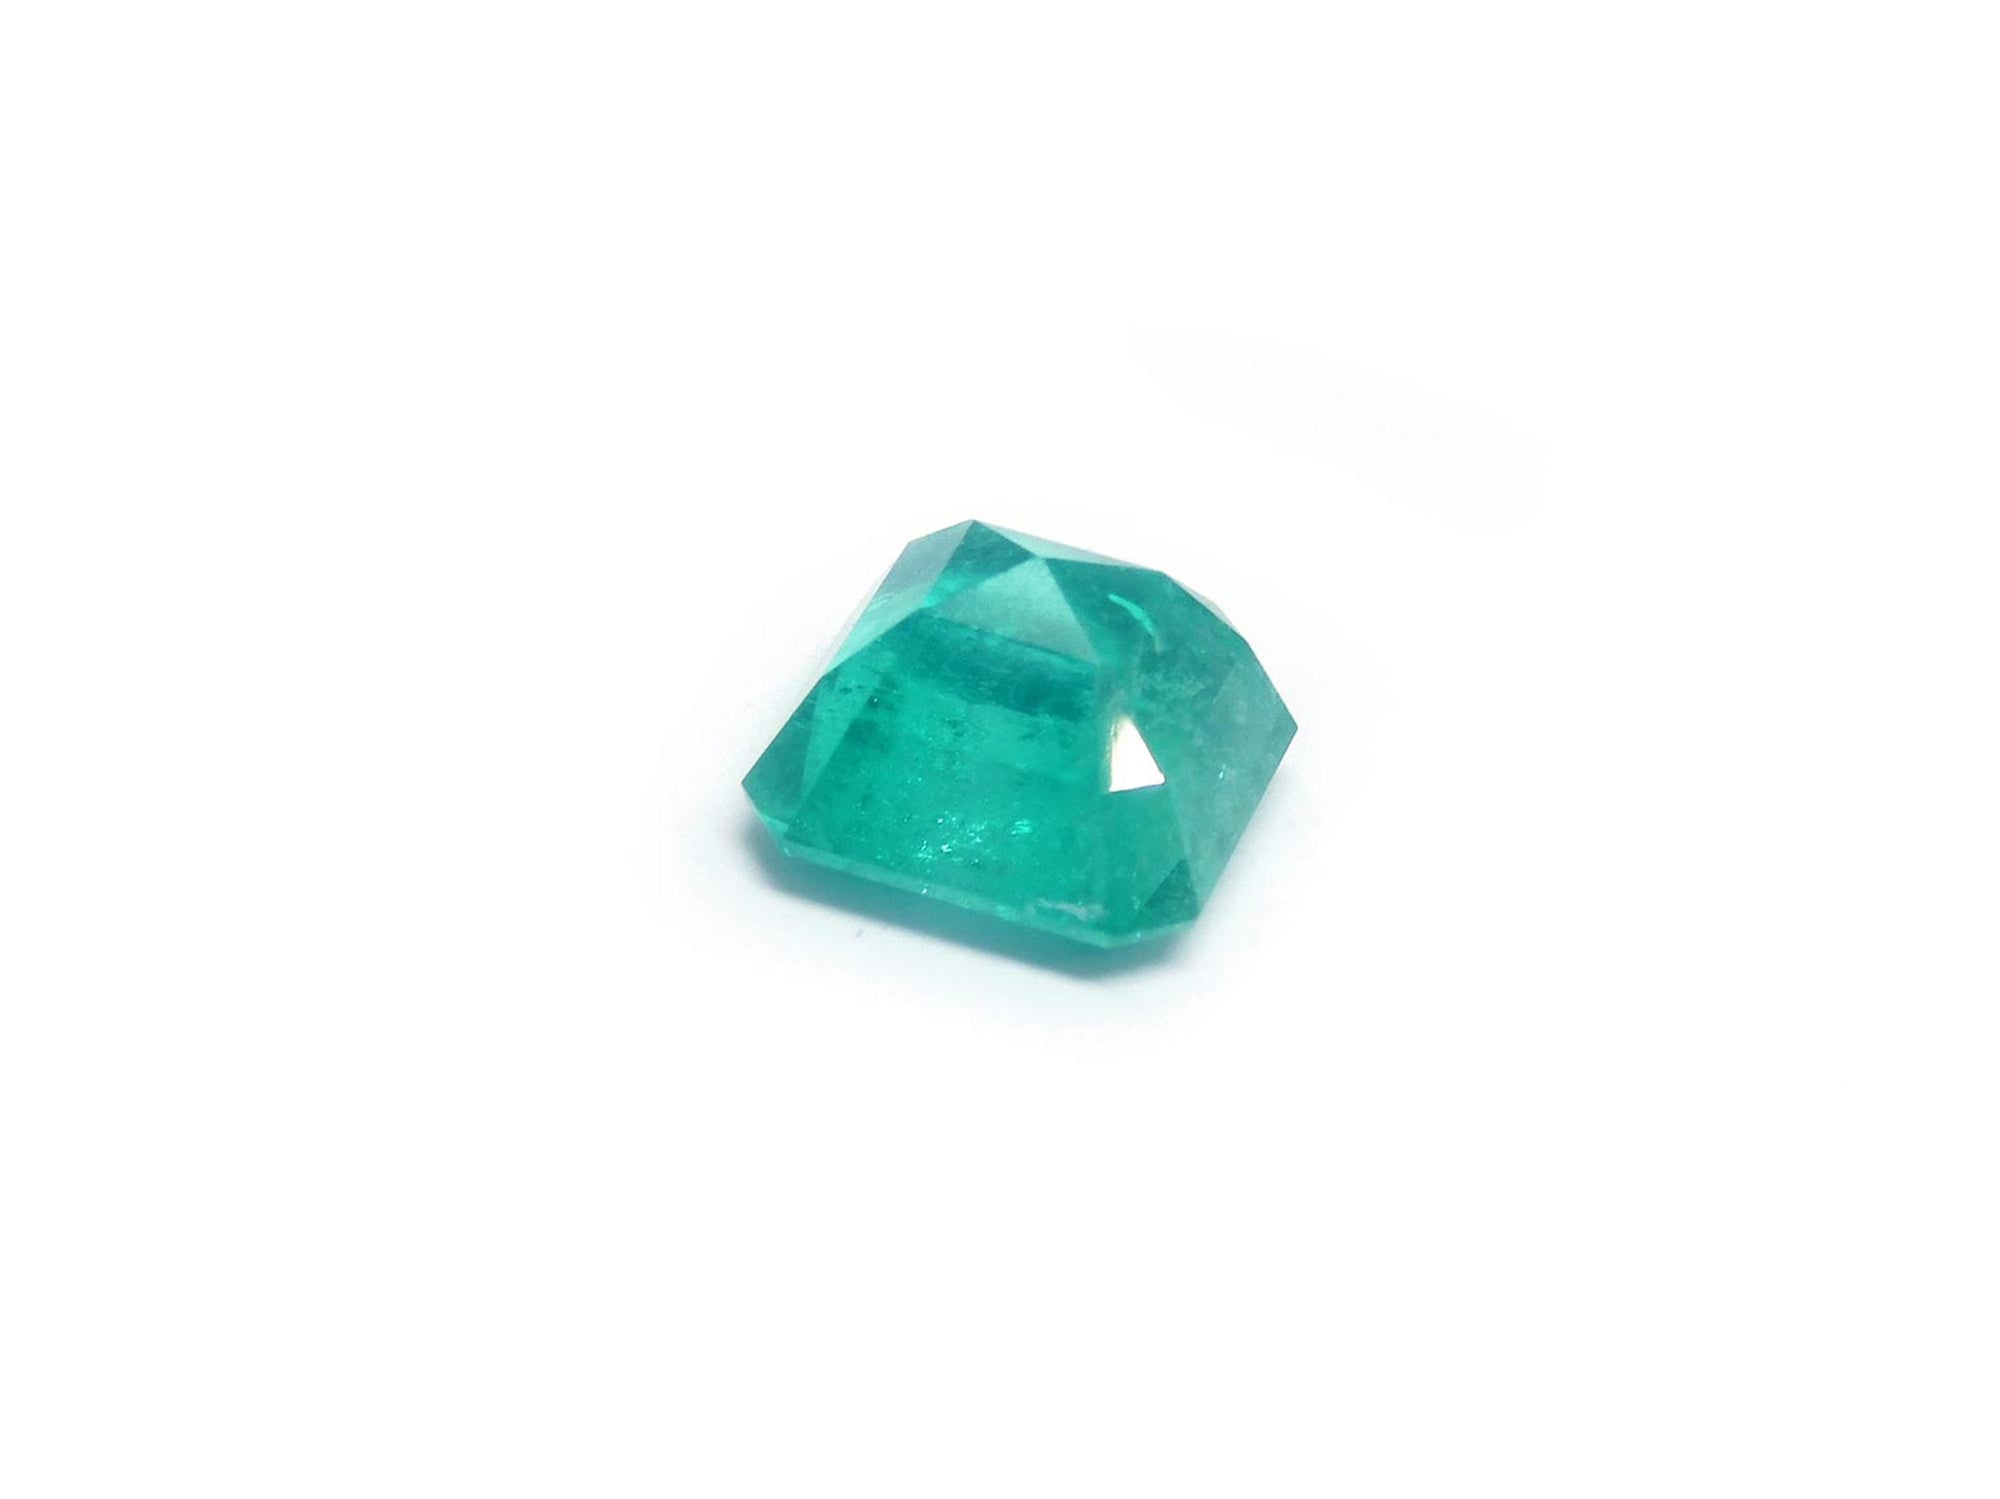 Bluish green color emerald